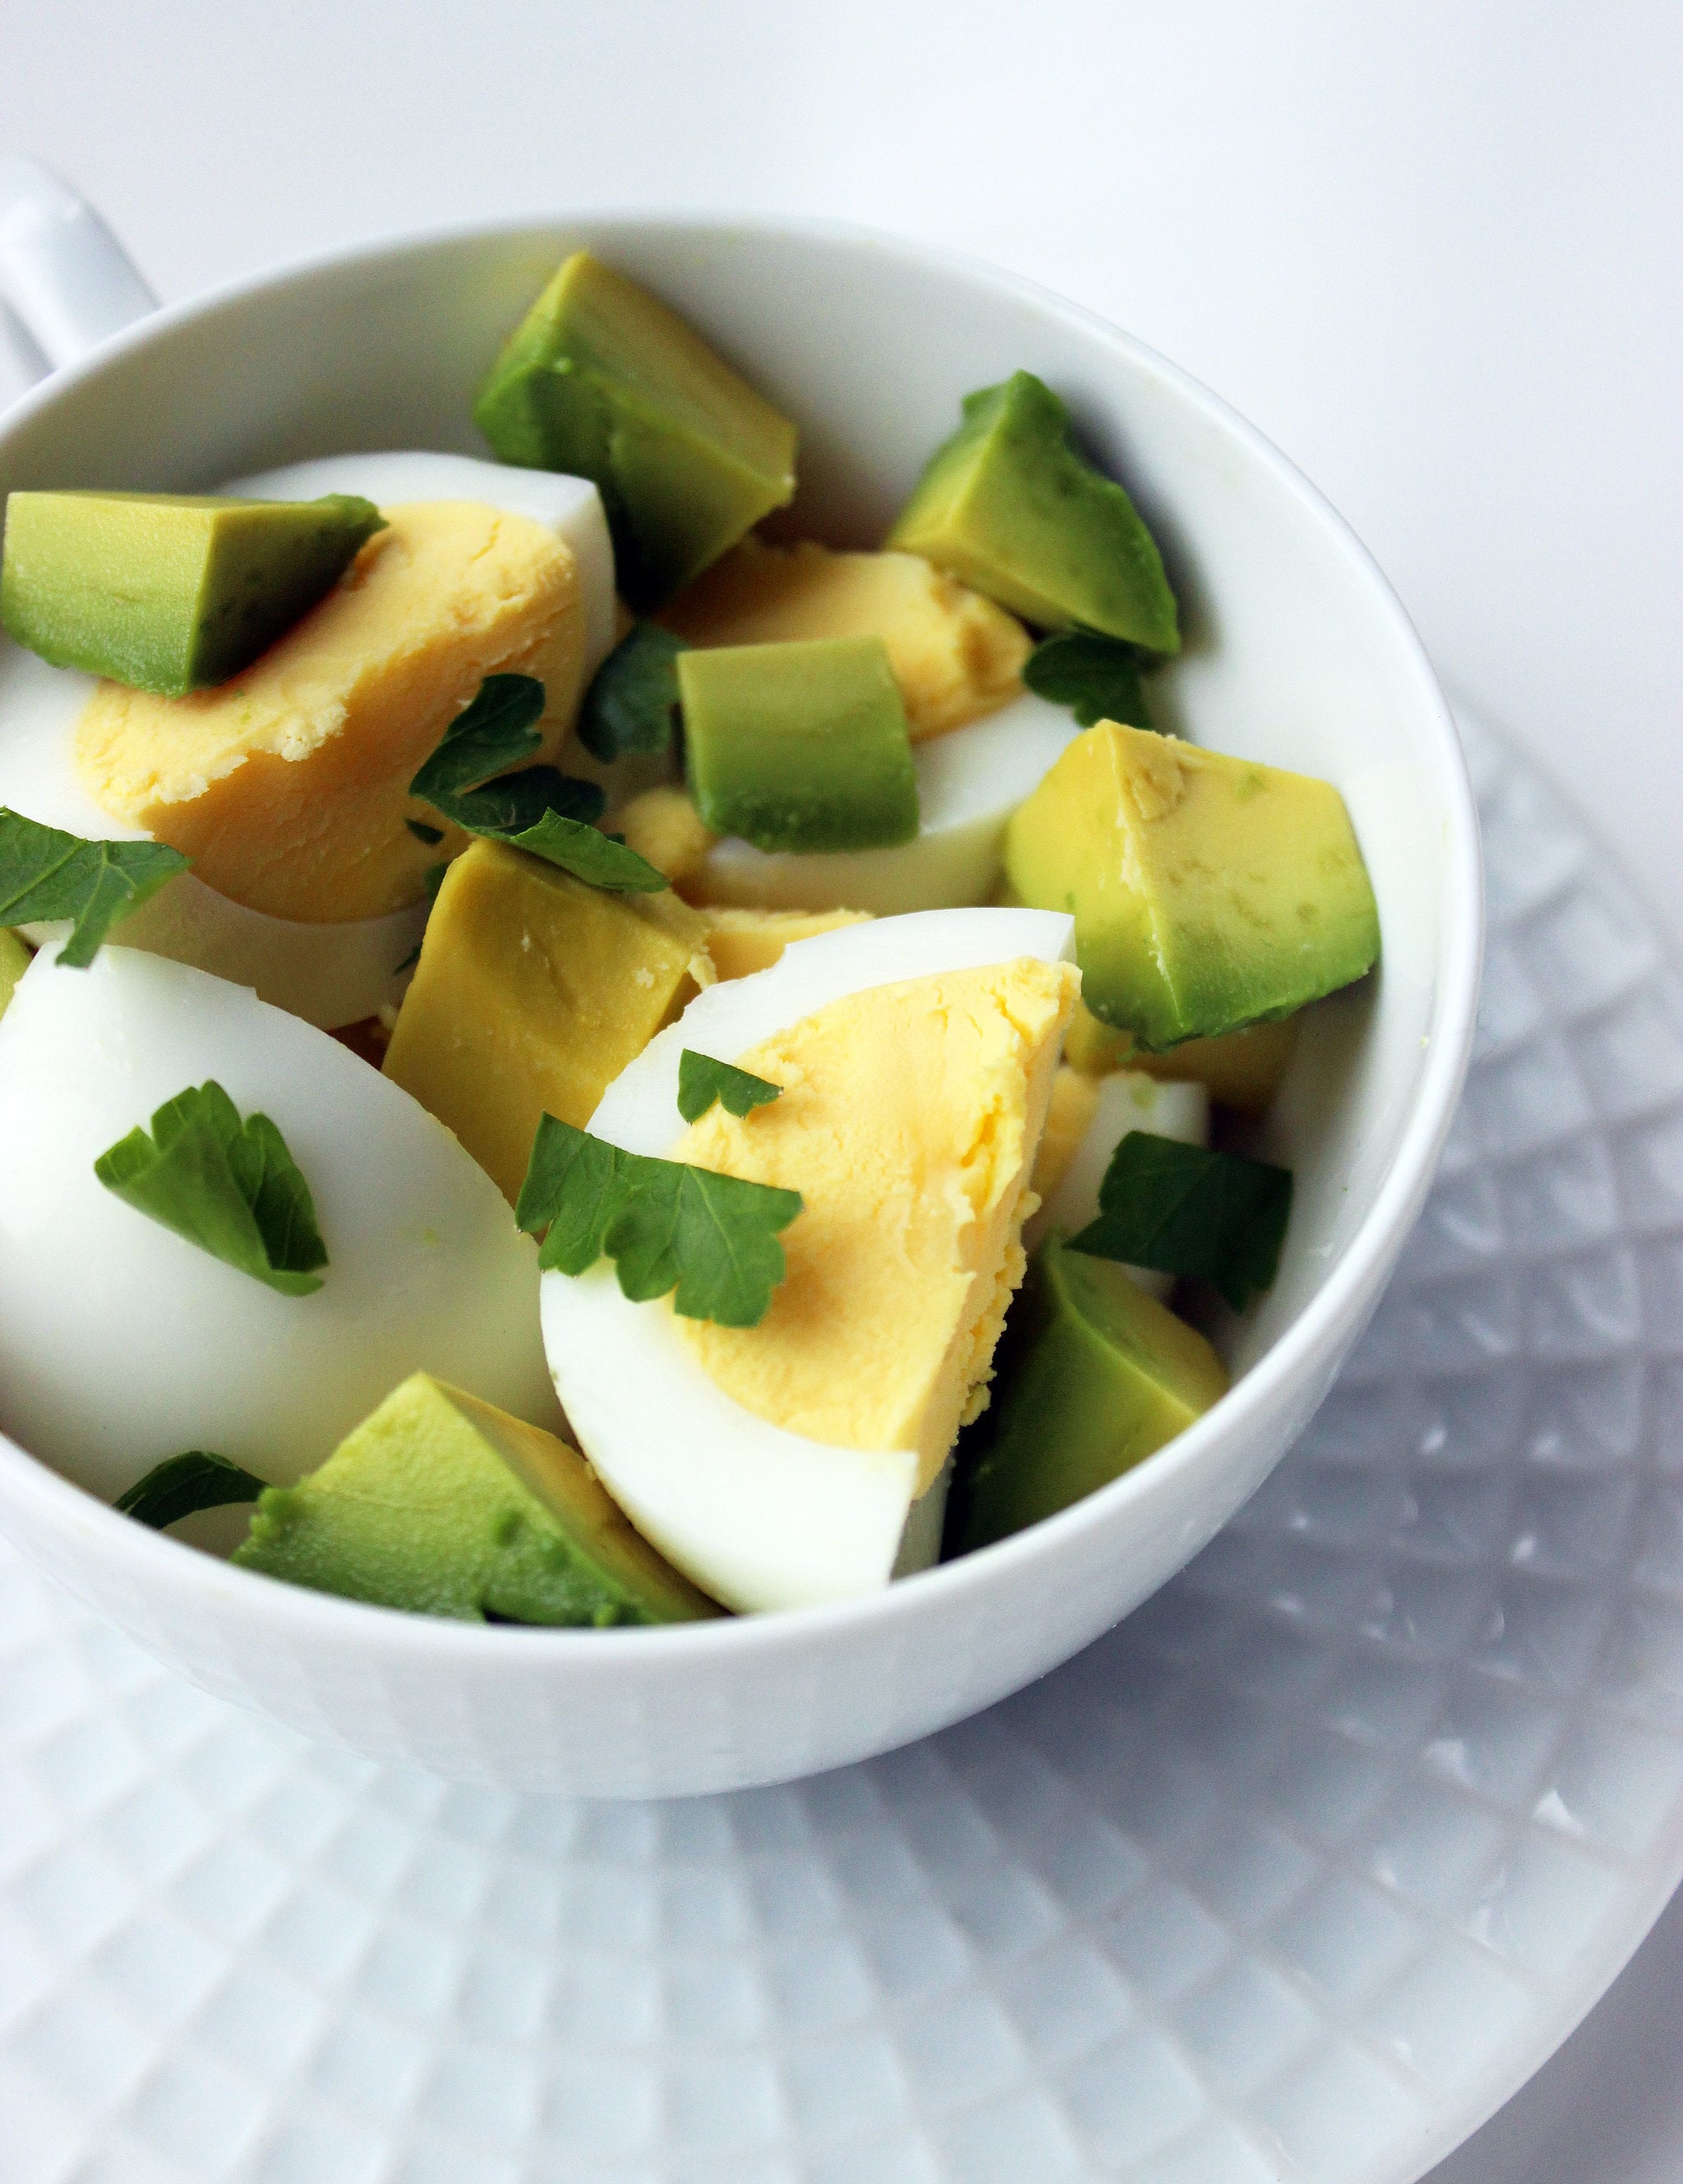 Hardgekookte eieren met avocado